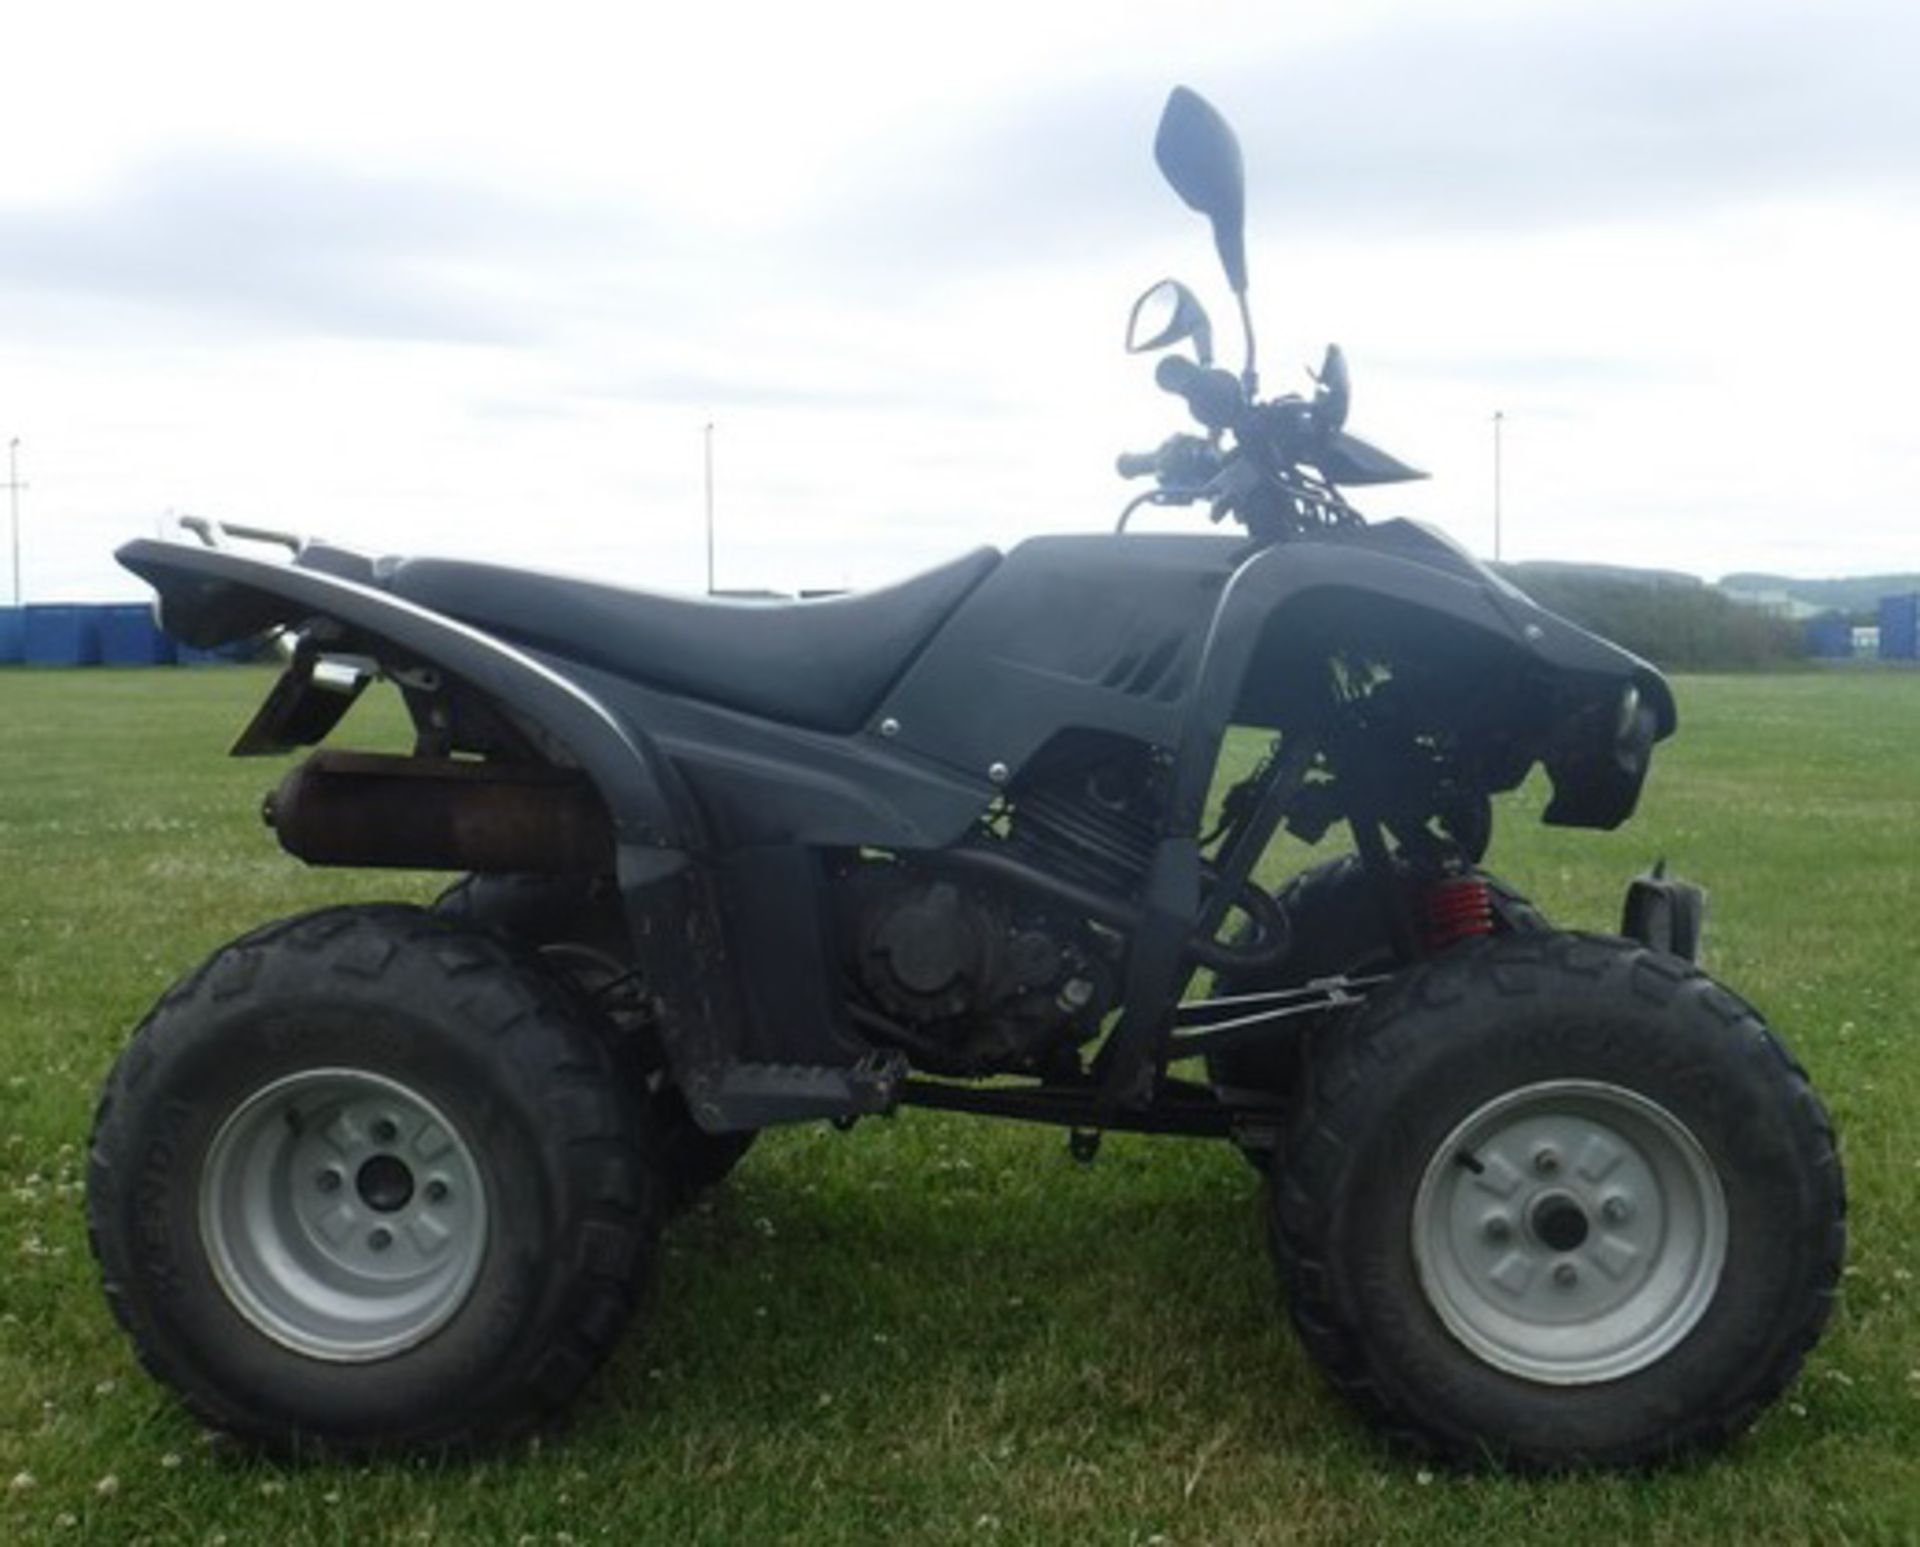 2006 ADLY ATV-3005 Quadzilla 300ES. Reg - VU06UHN. VIN - RFLXH3026A005230. 2 axles. 5419hrs (not ve - Image 6 of 11